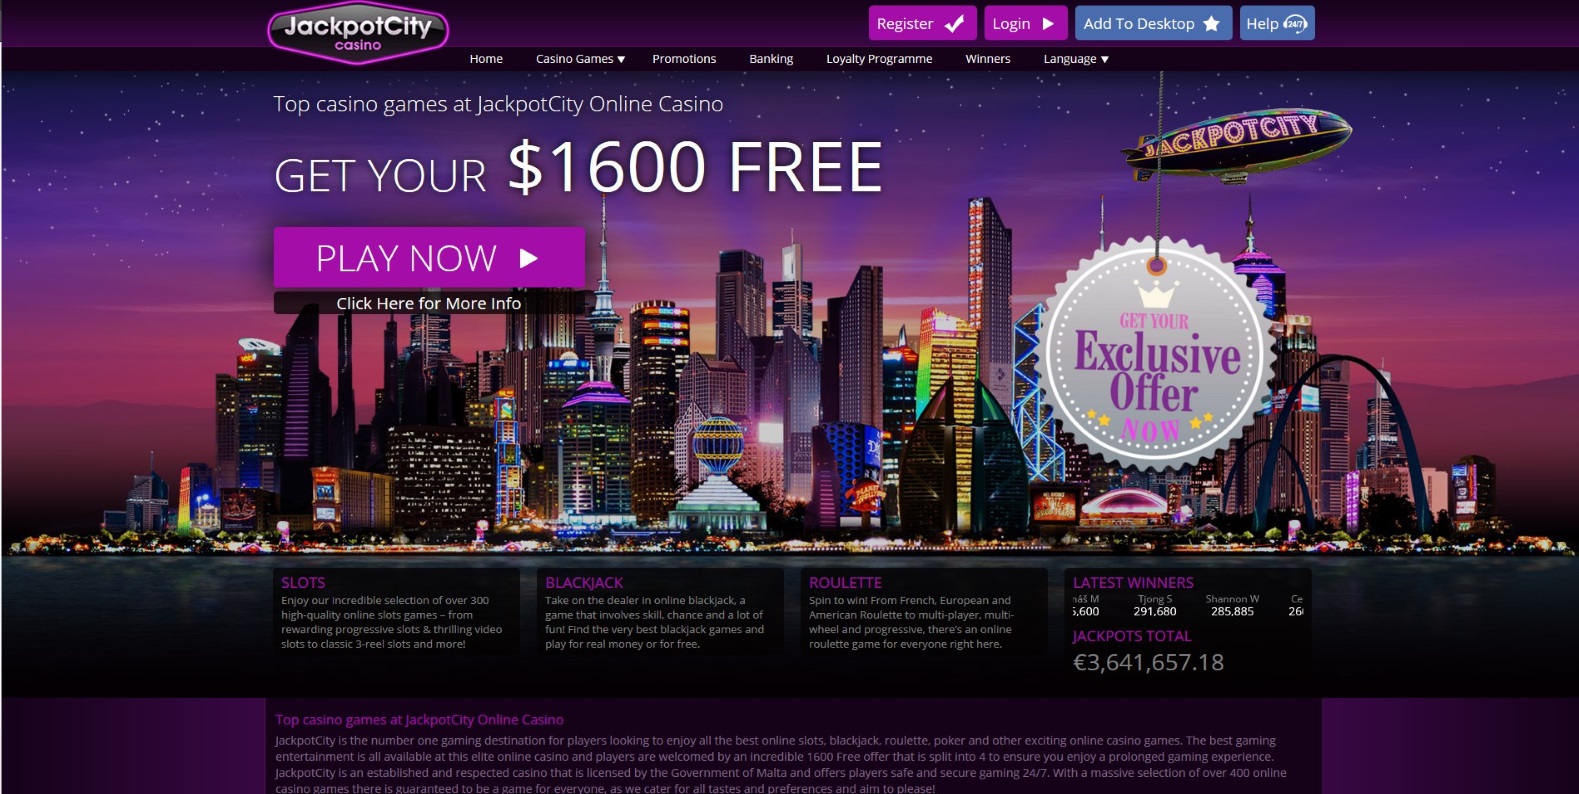 The homepage of JackpotCity Casino